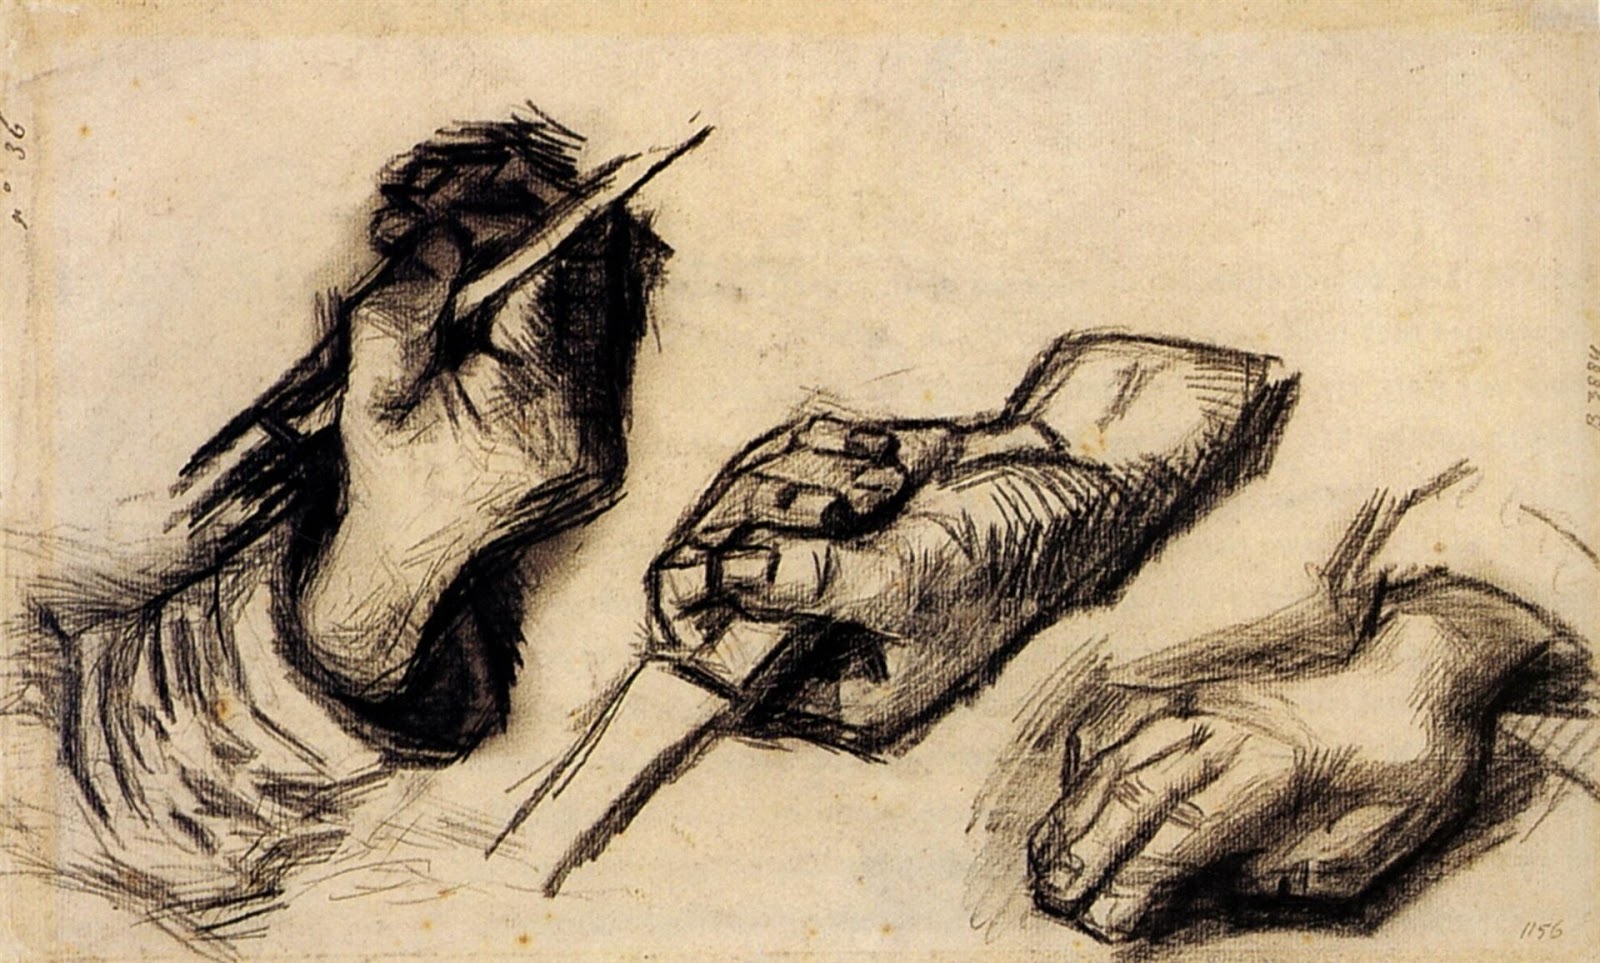 Vincent+Van+Gogh-1853-1890 (816).jpg